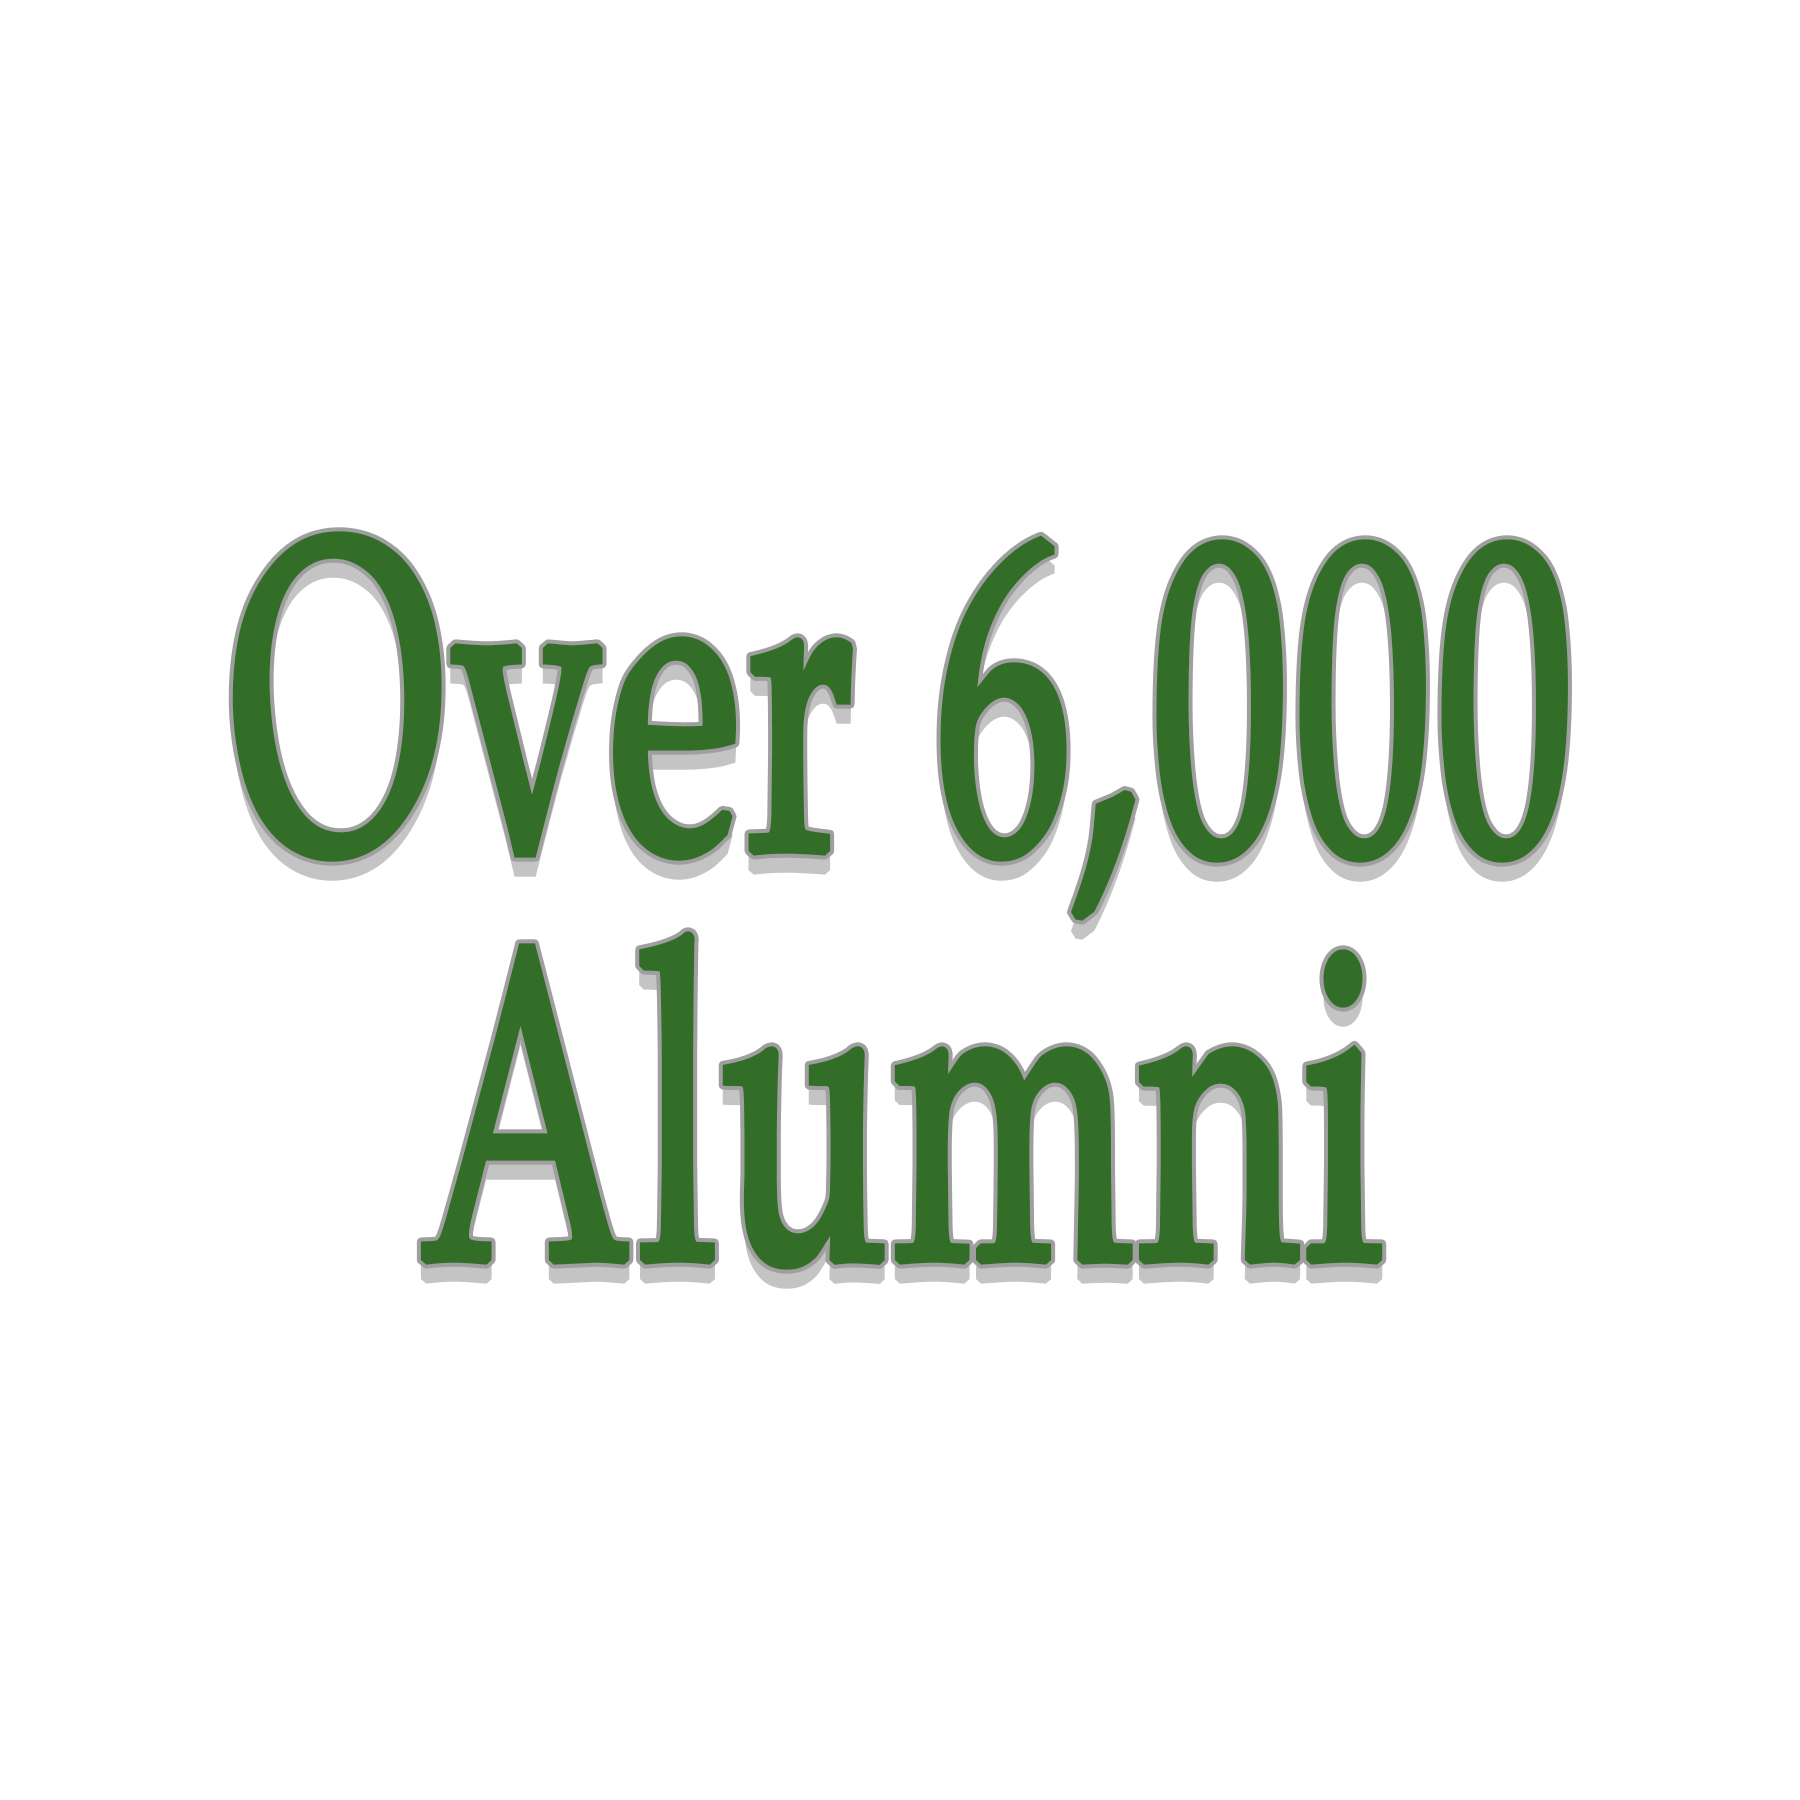 Over 6,000 Alumni